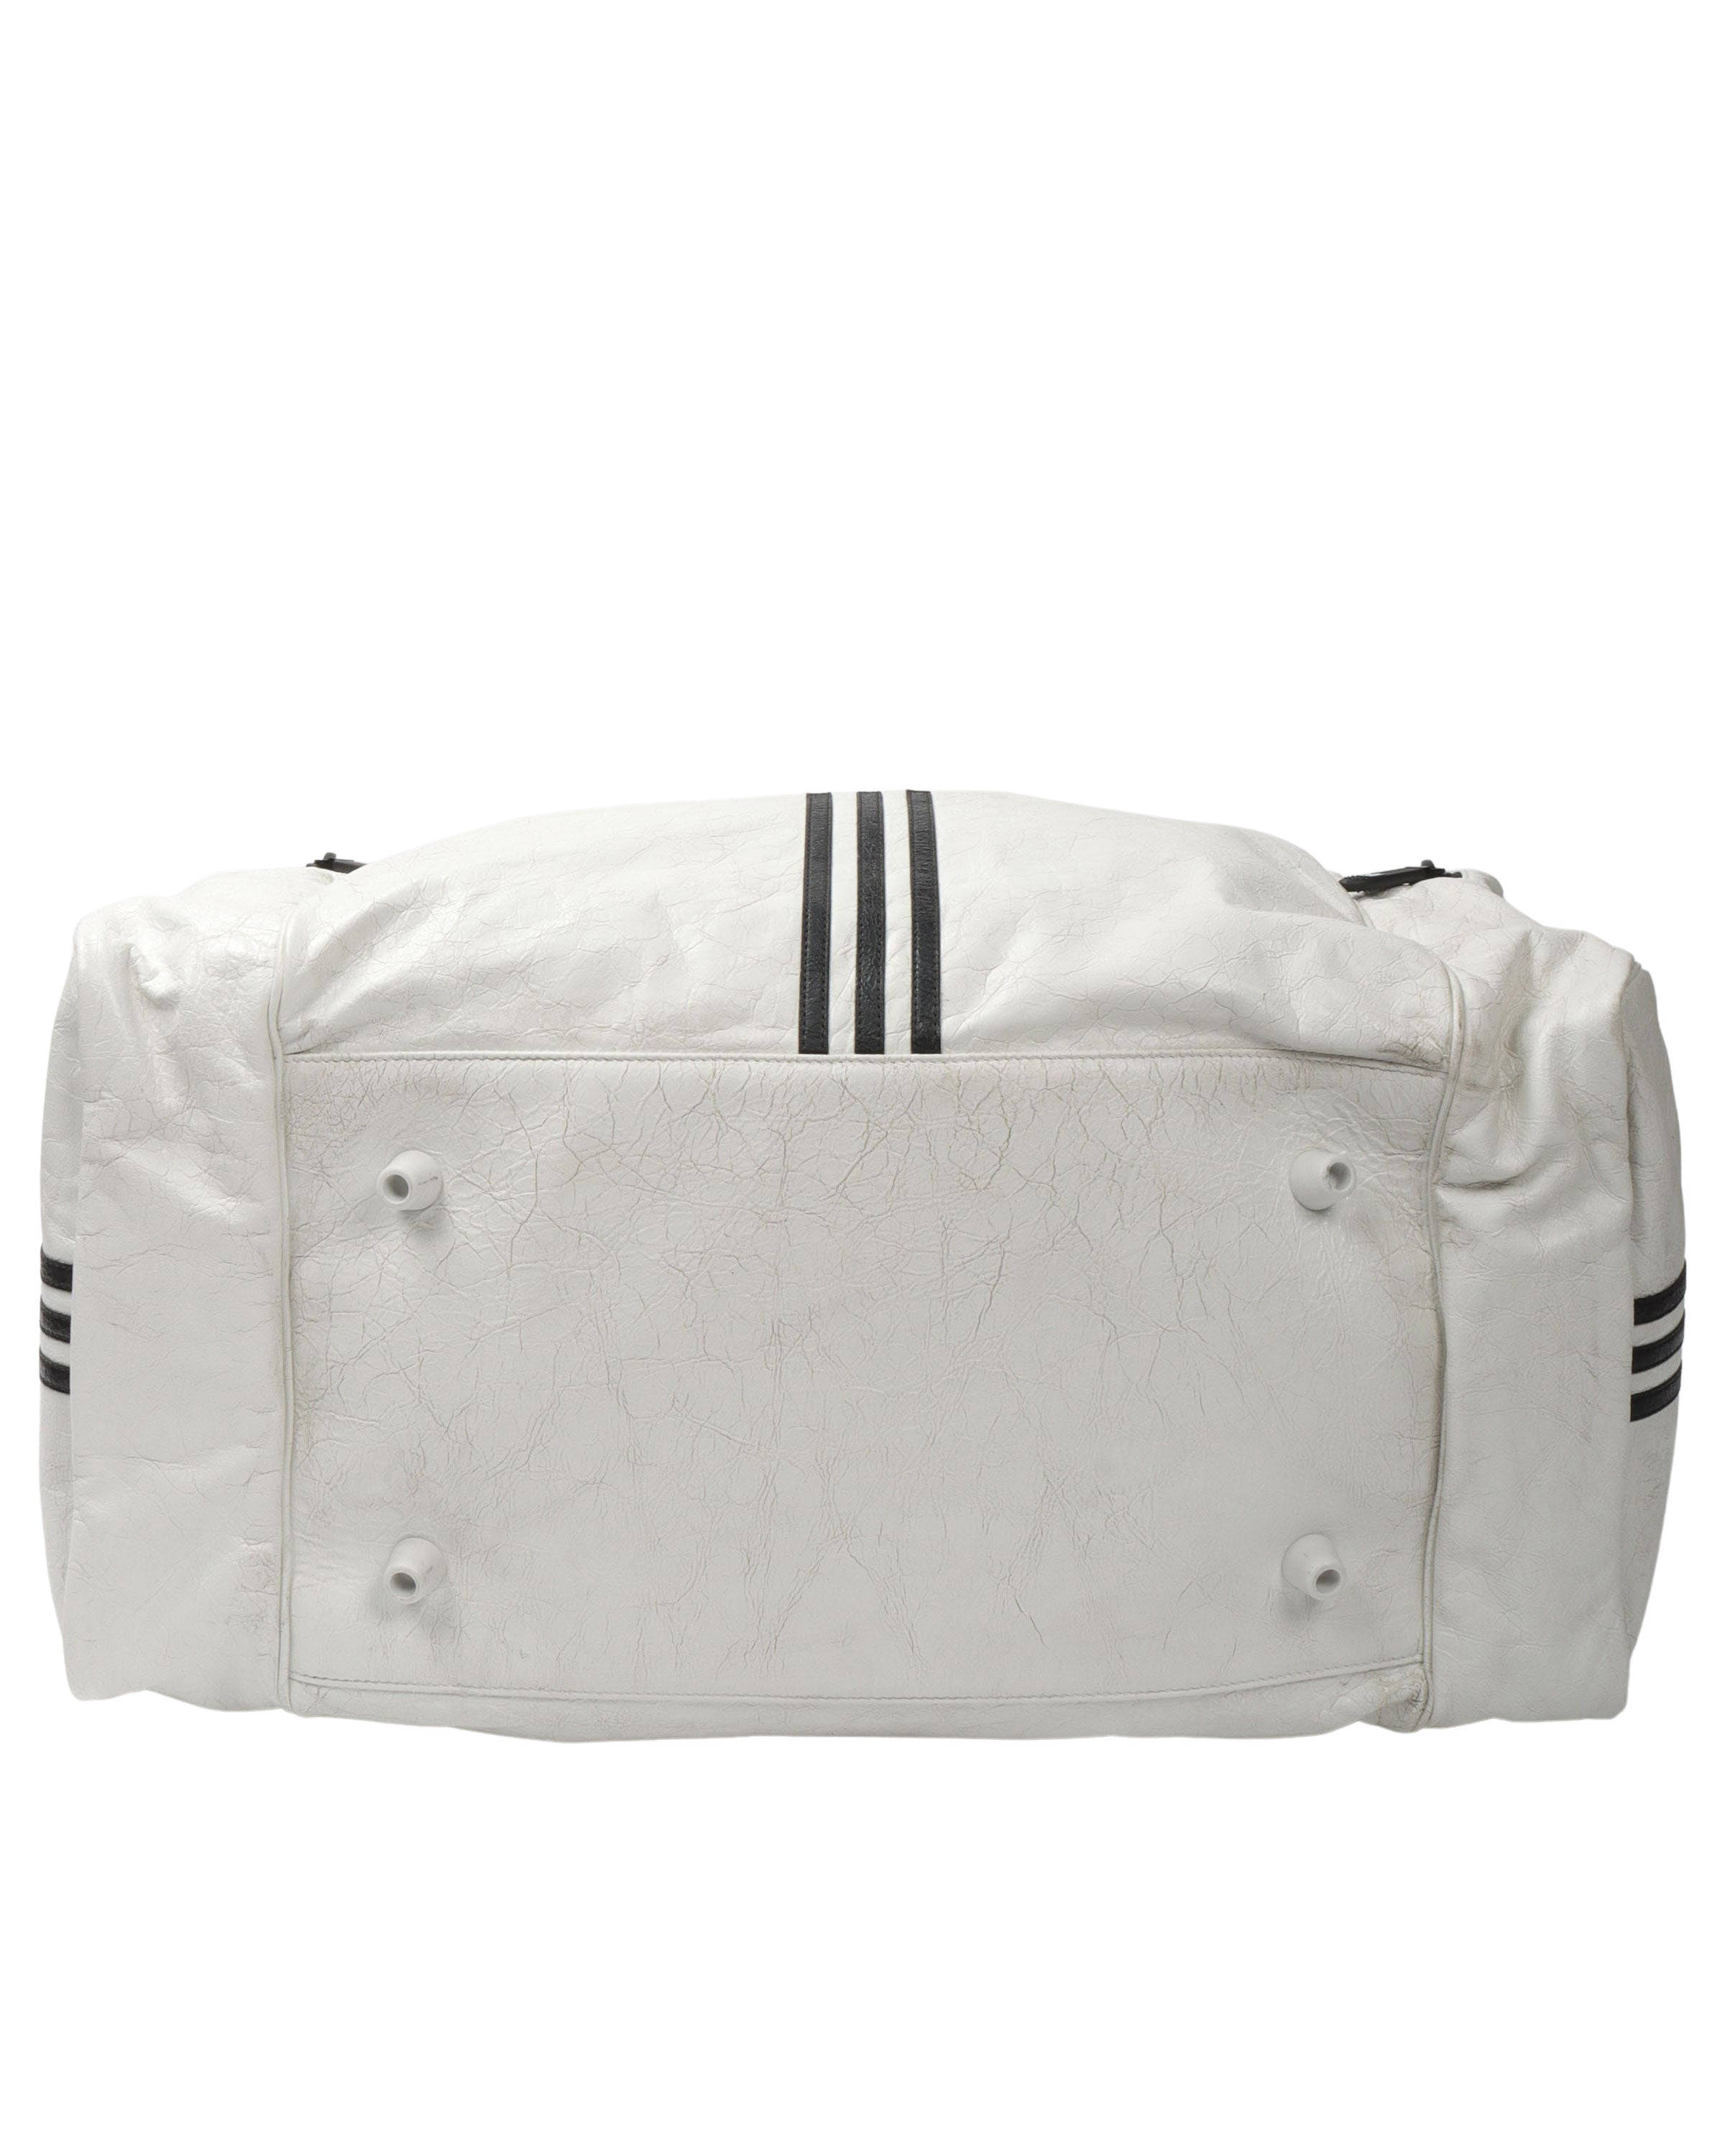 Adidas Leather Duffle Bag